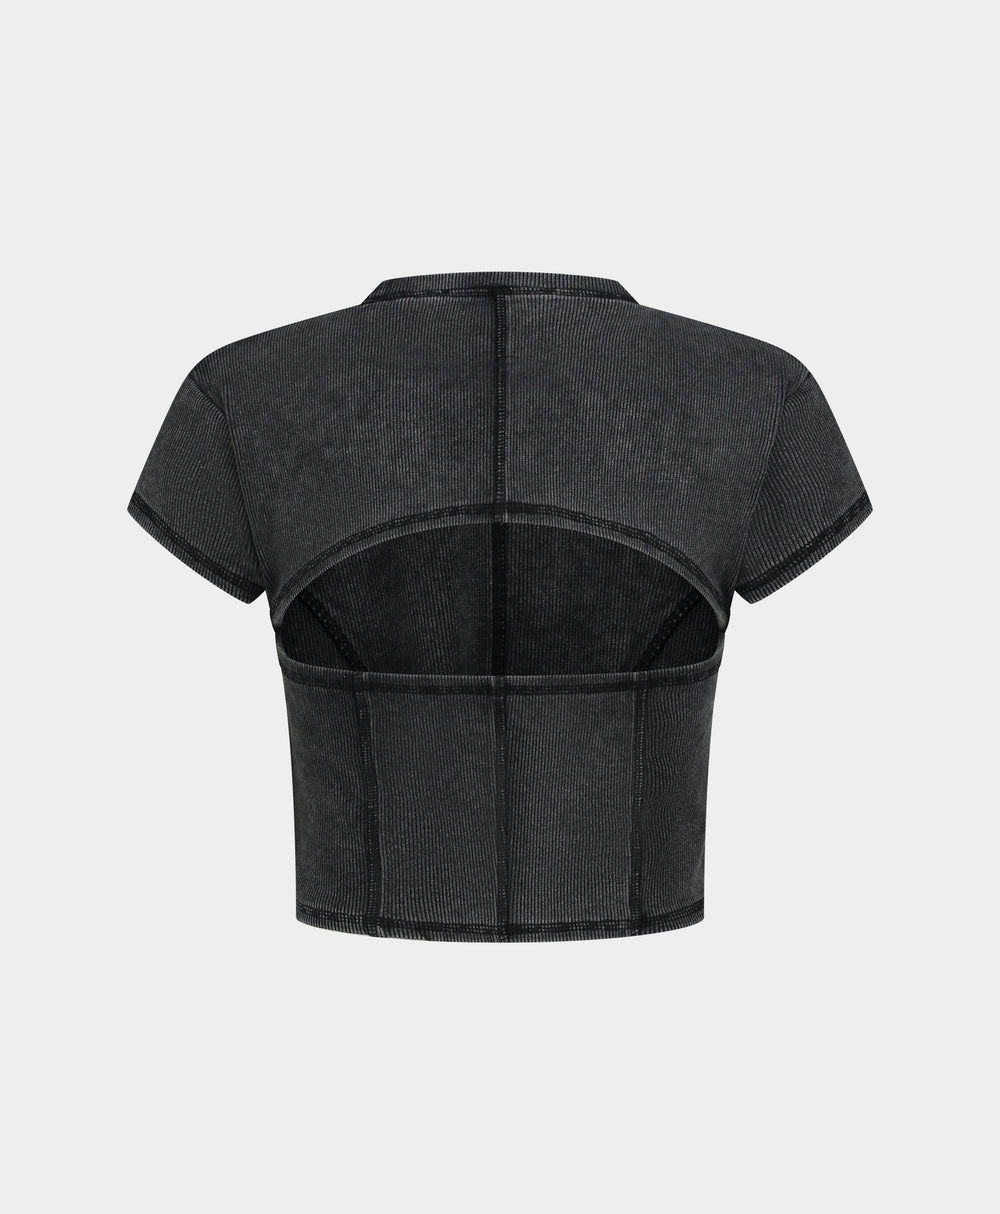 DP - Black Nalia T-shirt - Packshot - Rear